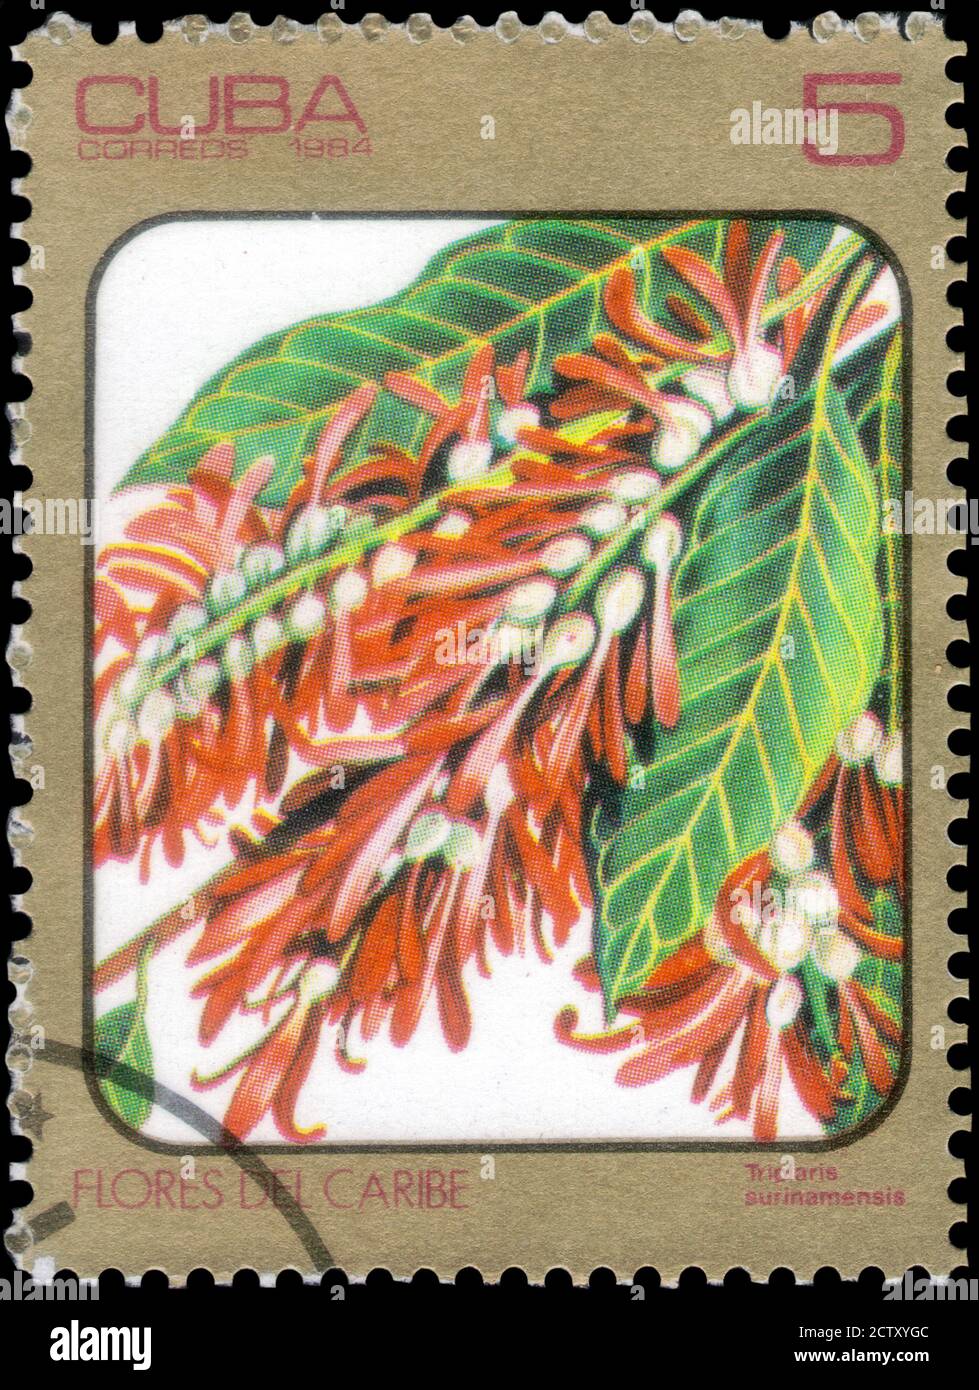 Saint Petersburg, Russia - September 18, 2020: Stamp printed in the Cuba the image of the Triplaris surinamensis, circa 1984 Stock Photo